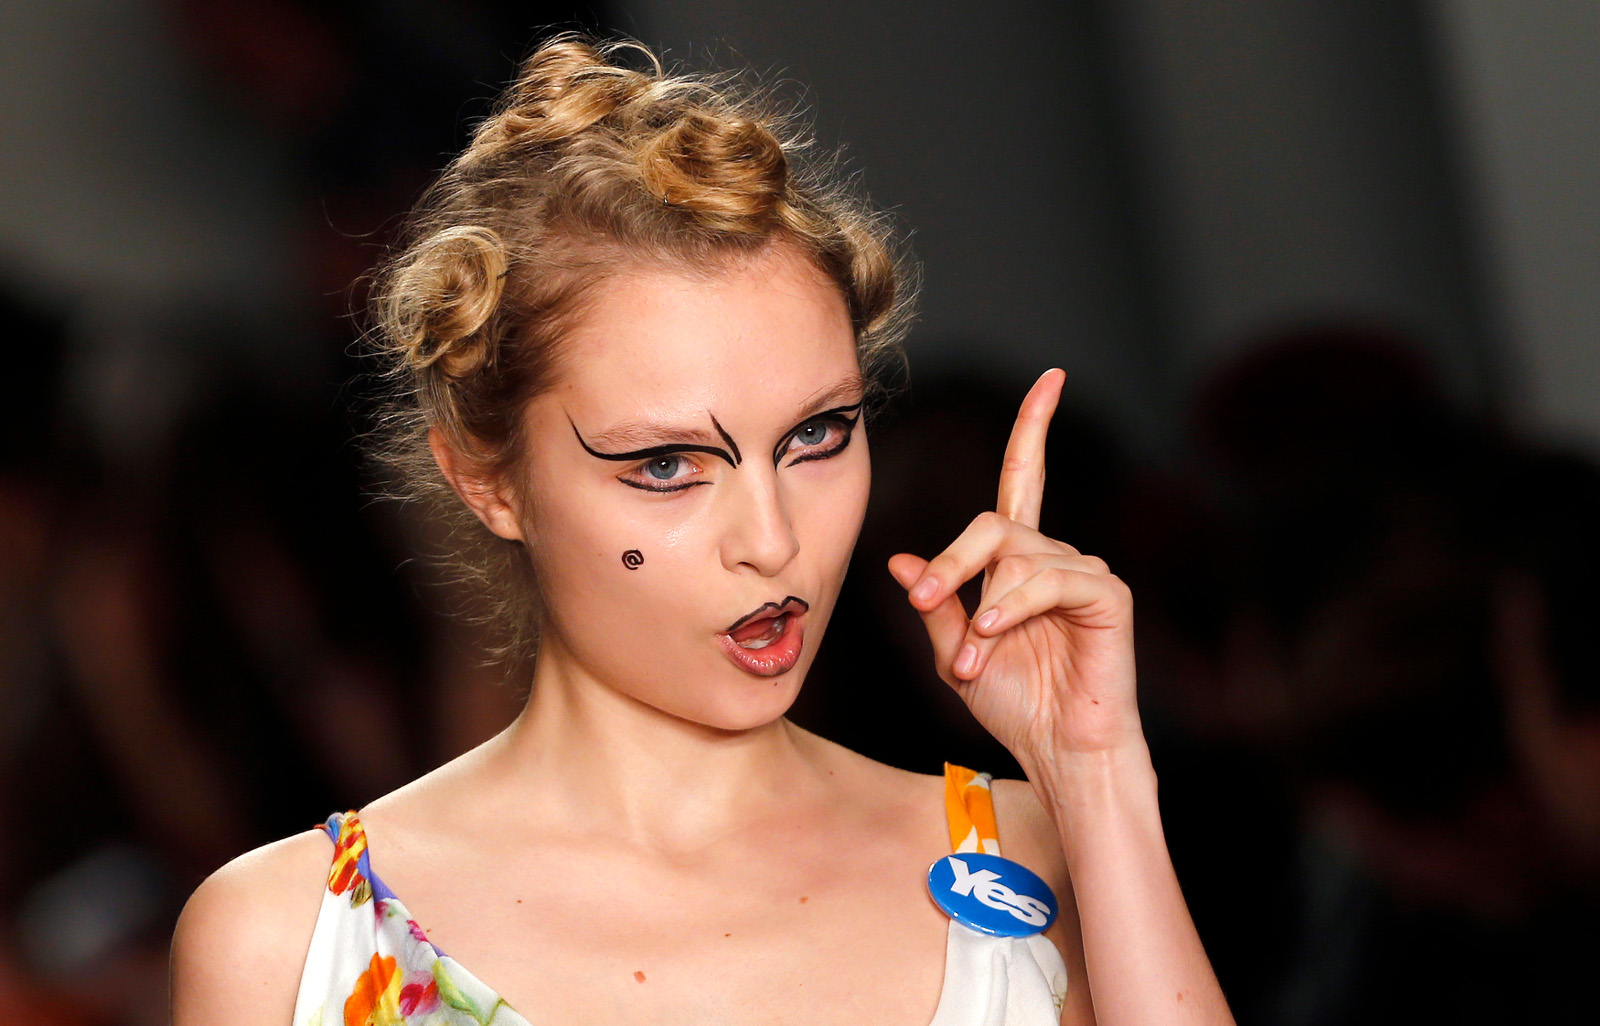 Vivienne Westwood London Fashion Week model wears Yes badge